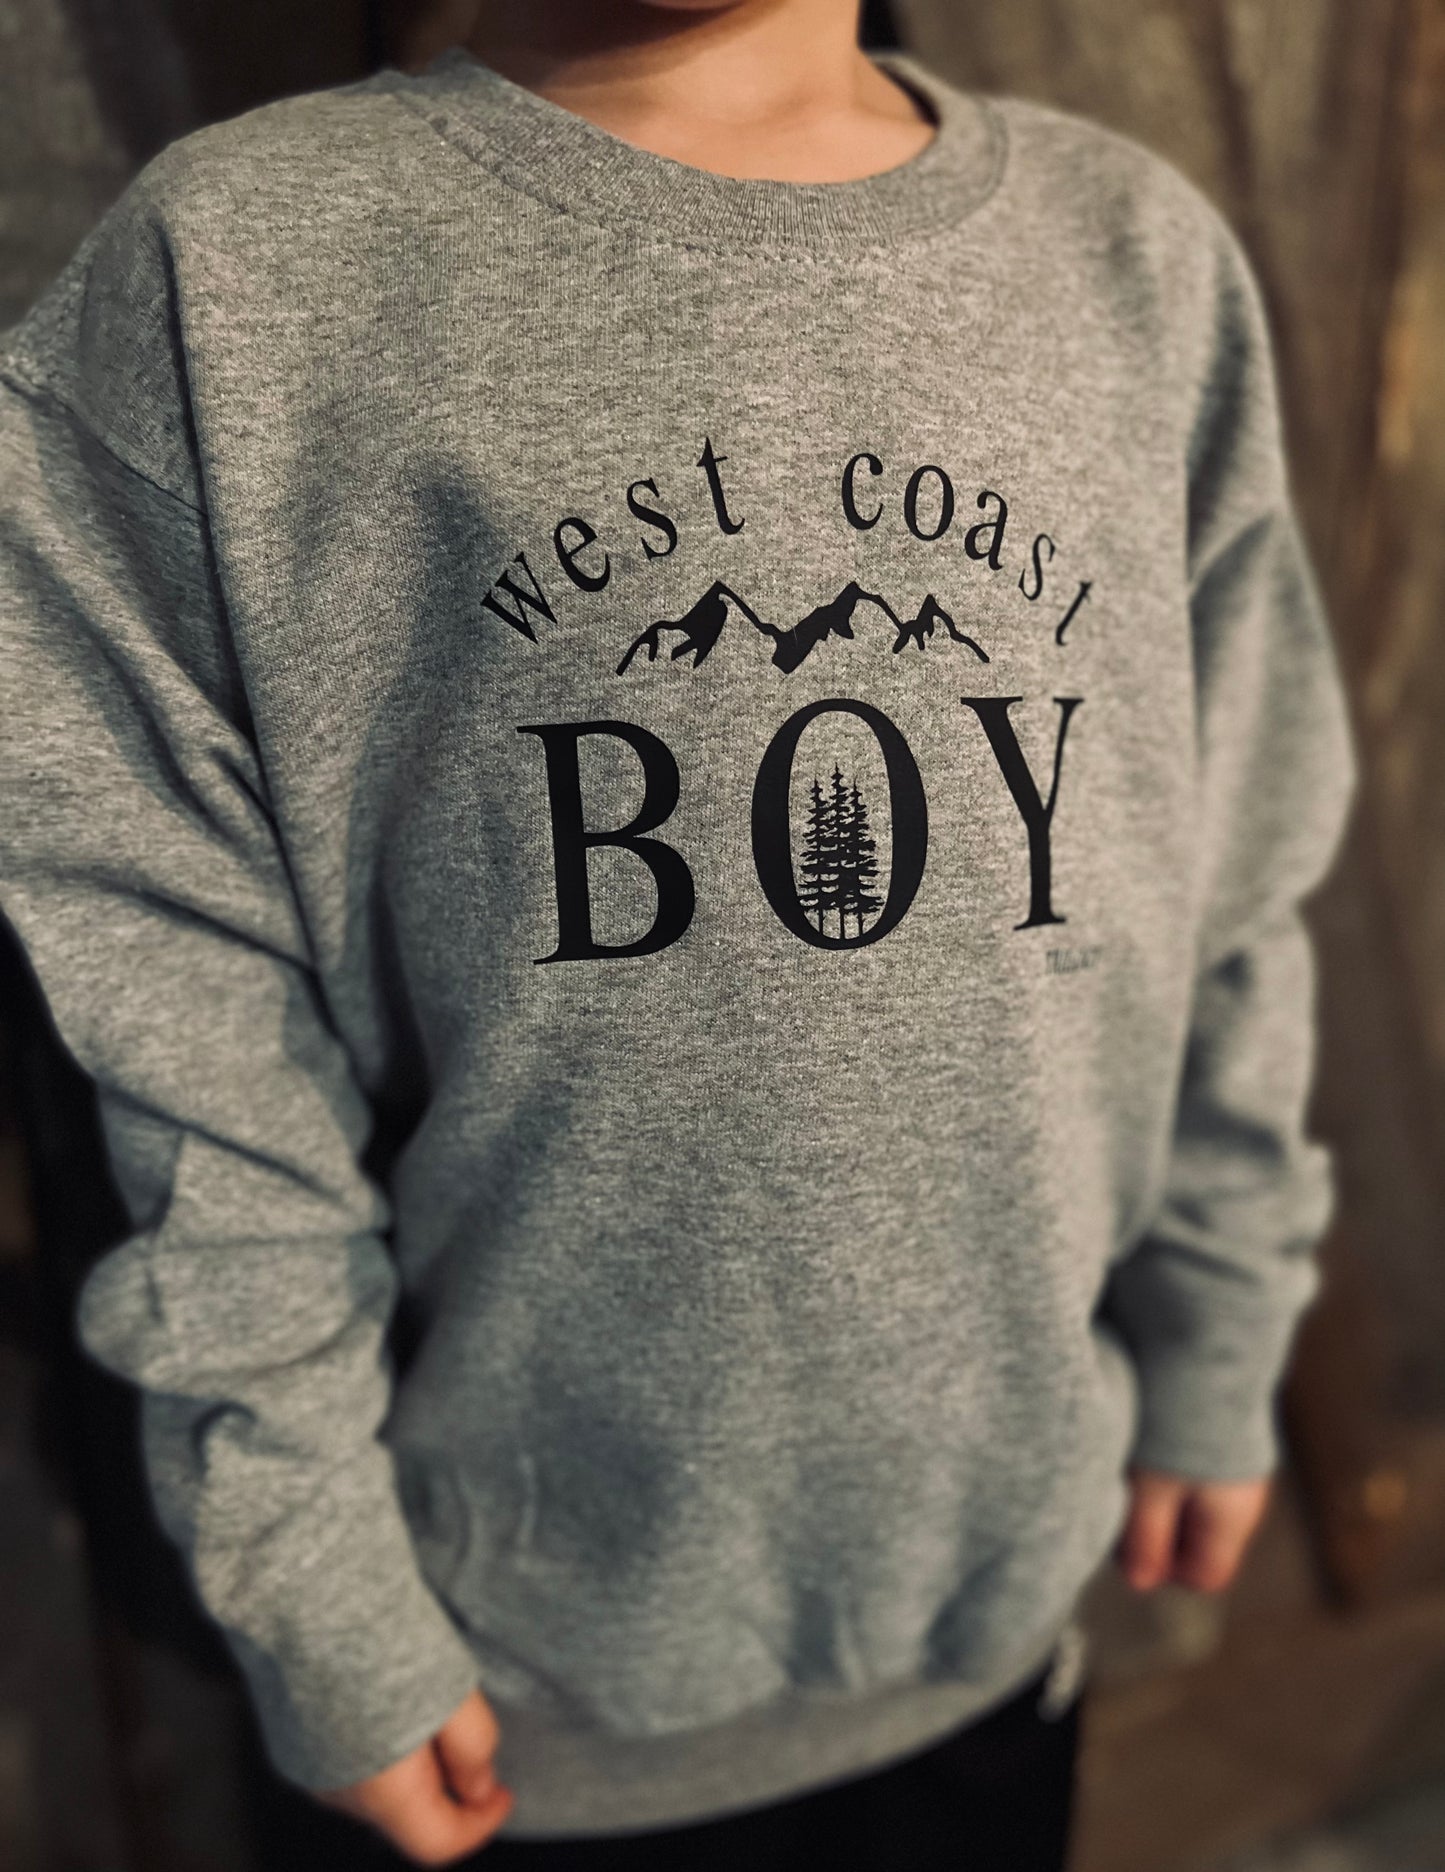 West Coast Boy